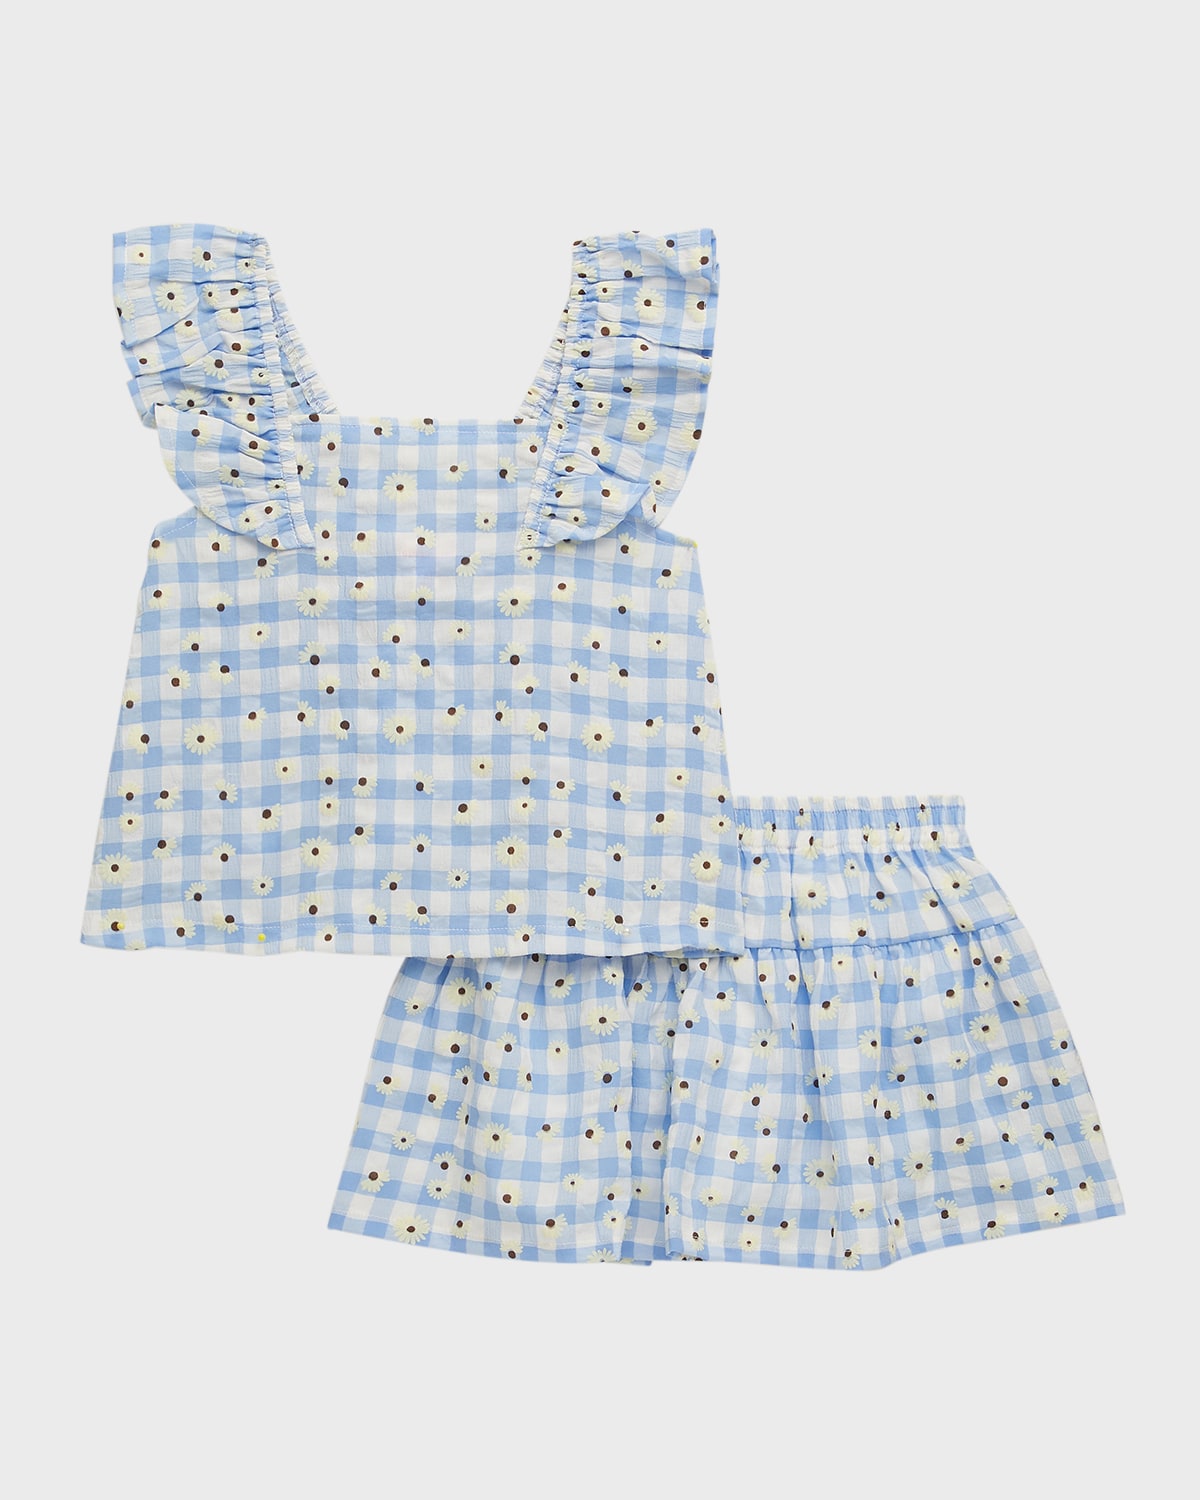 Girl's Plaid Skirt 2-Piece Set, Size 4-6X